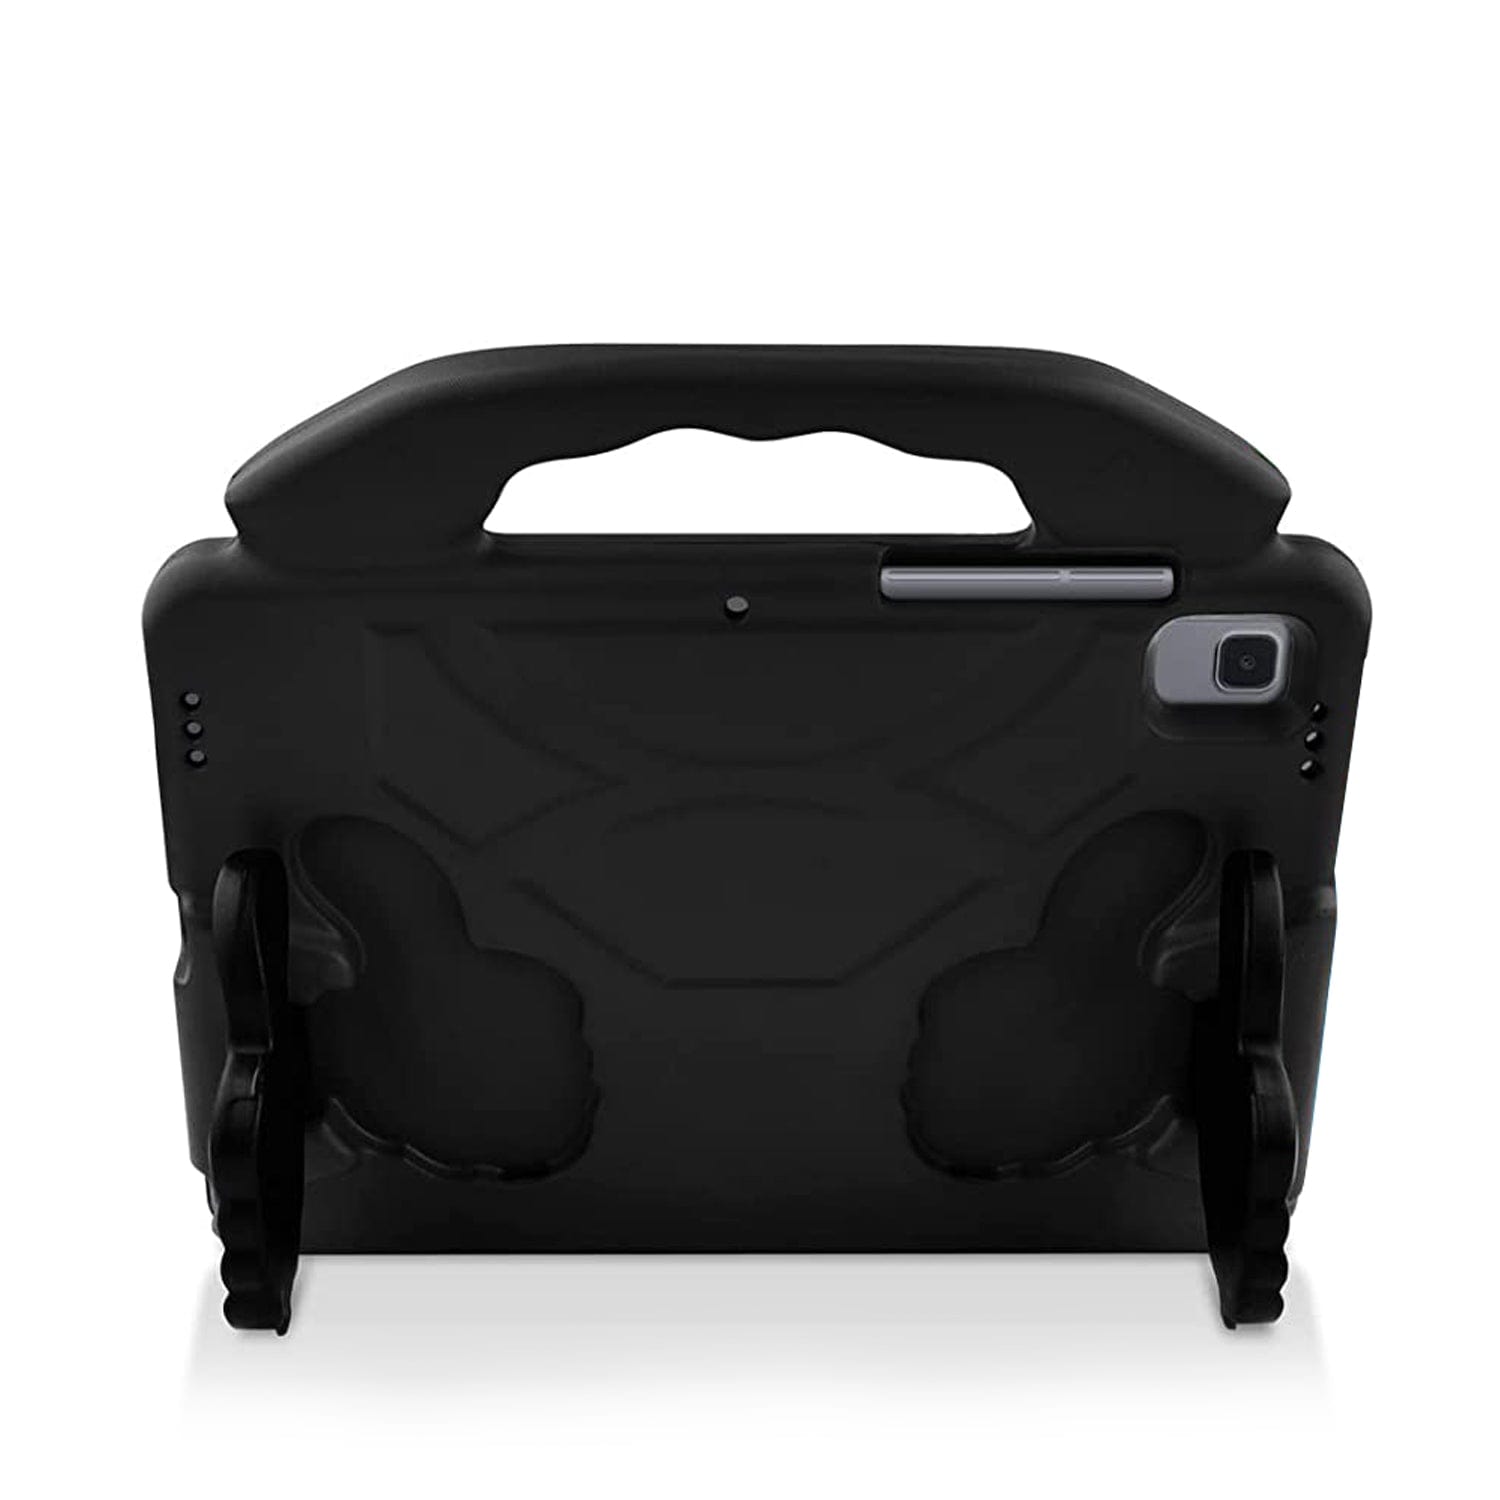 Wander Series Thumbs-up Kickstand Case - Galaxy Tab S6 Lite